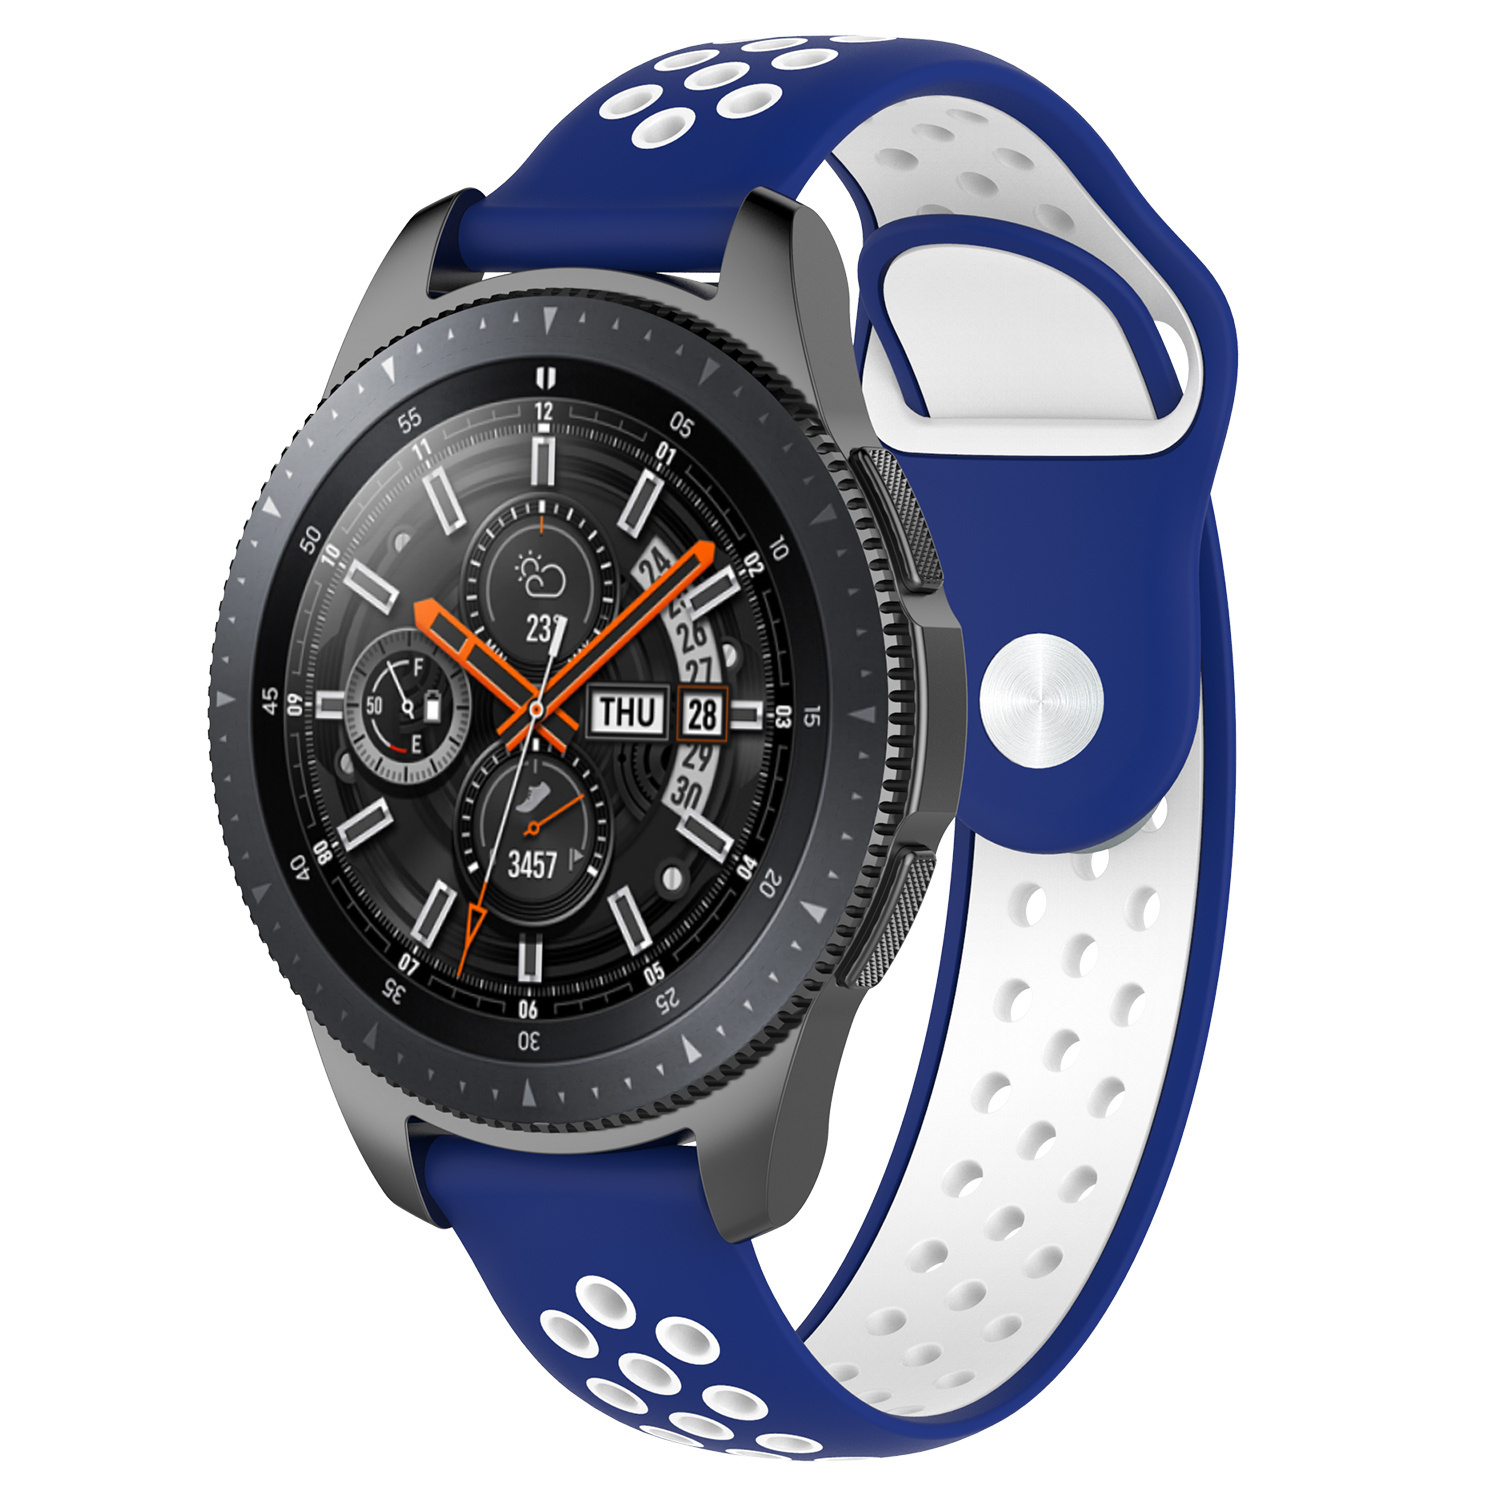 Samsung Galaxy Watch dupla sport szalag - kék fehér